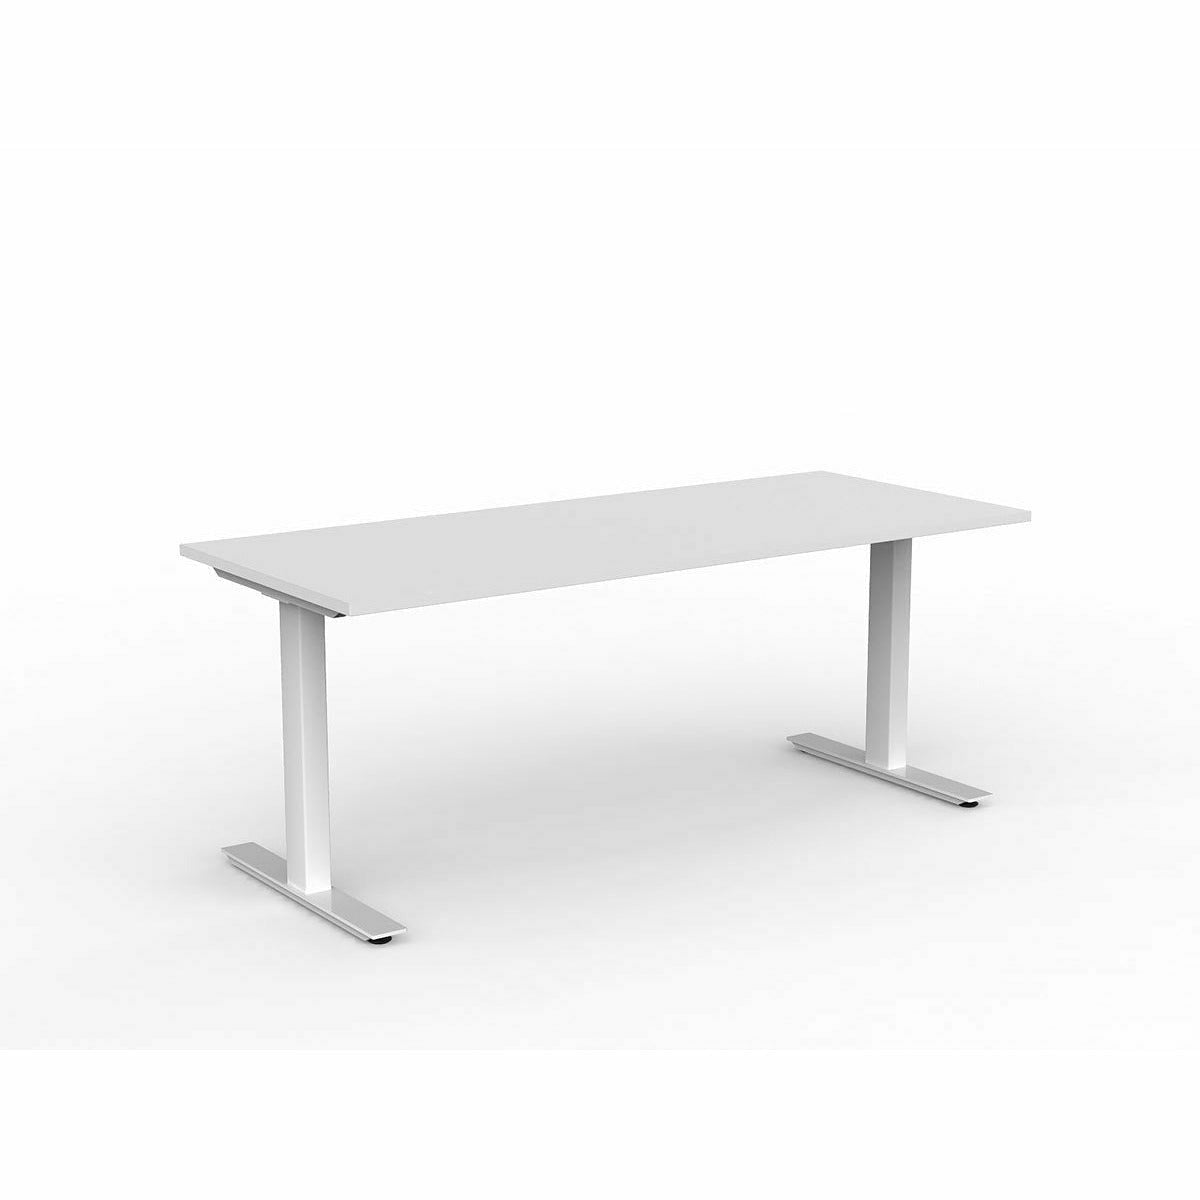 Agile Staightline Fixed Single Desk